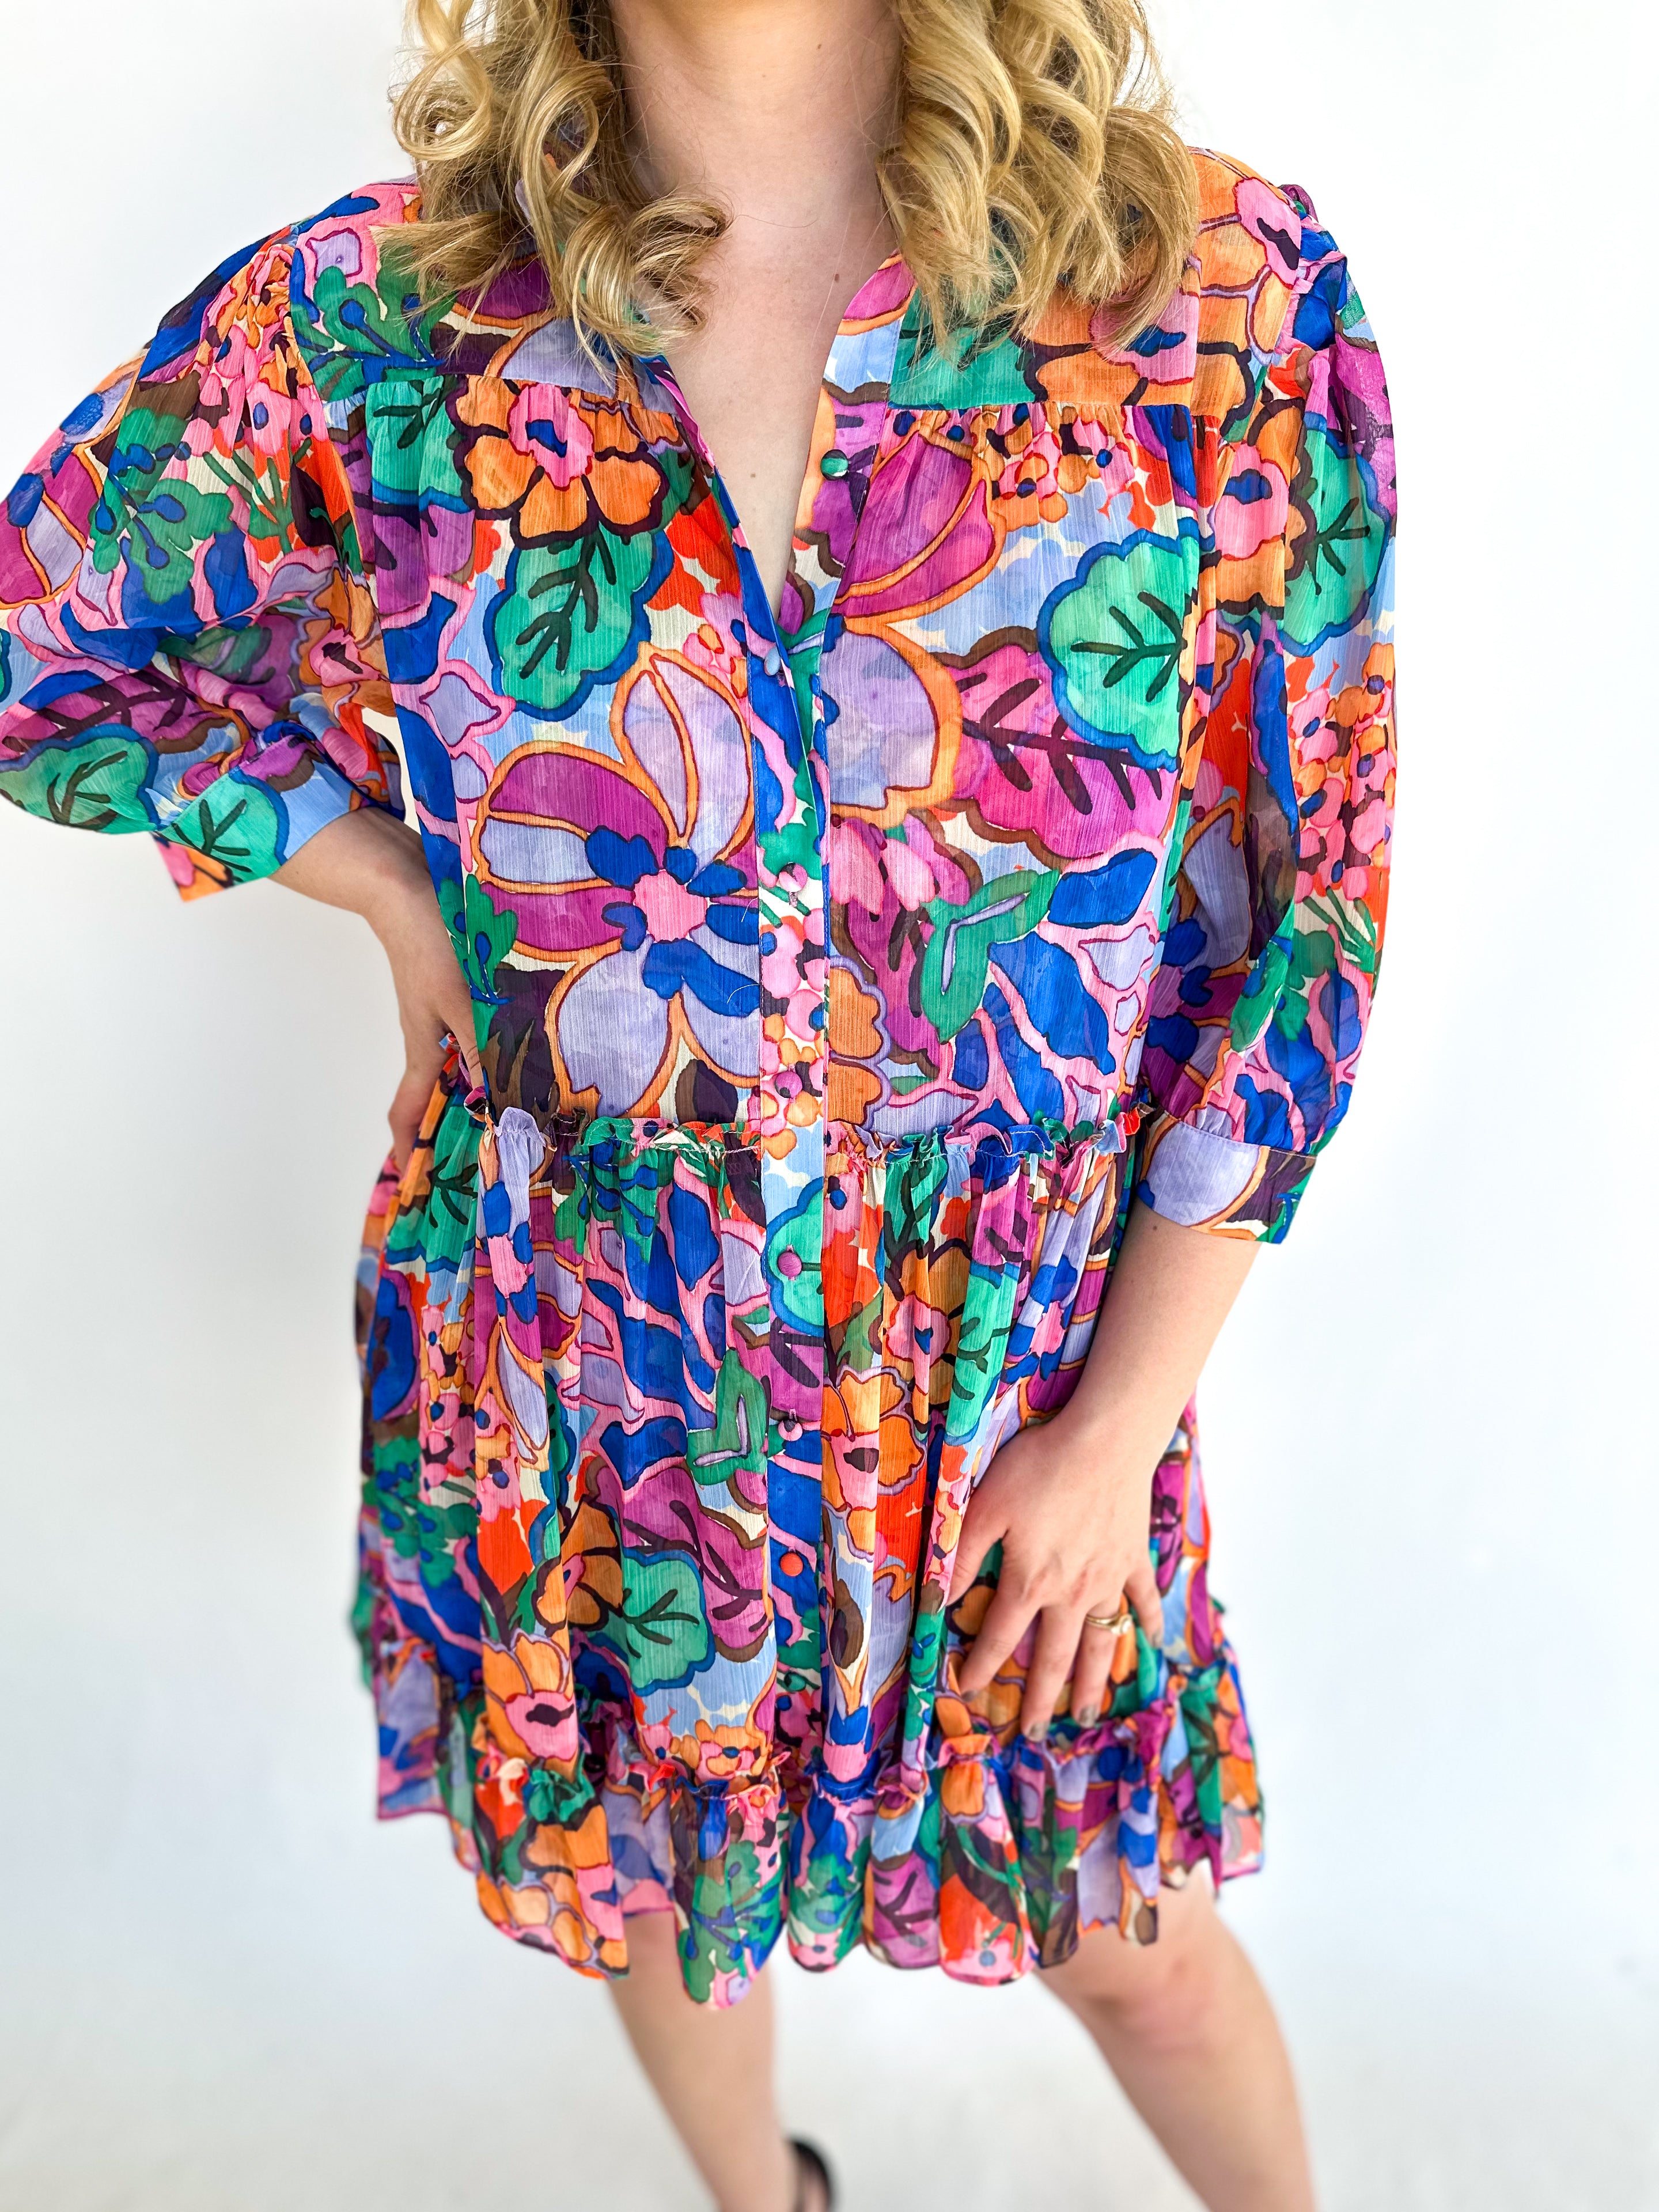 Jewel Tone Floral Mini Dress - THML-510 Mini-THML-July & June Women's Fashion Boutique Located in San Antonio, Texas